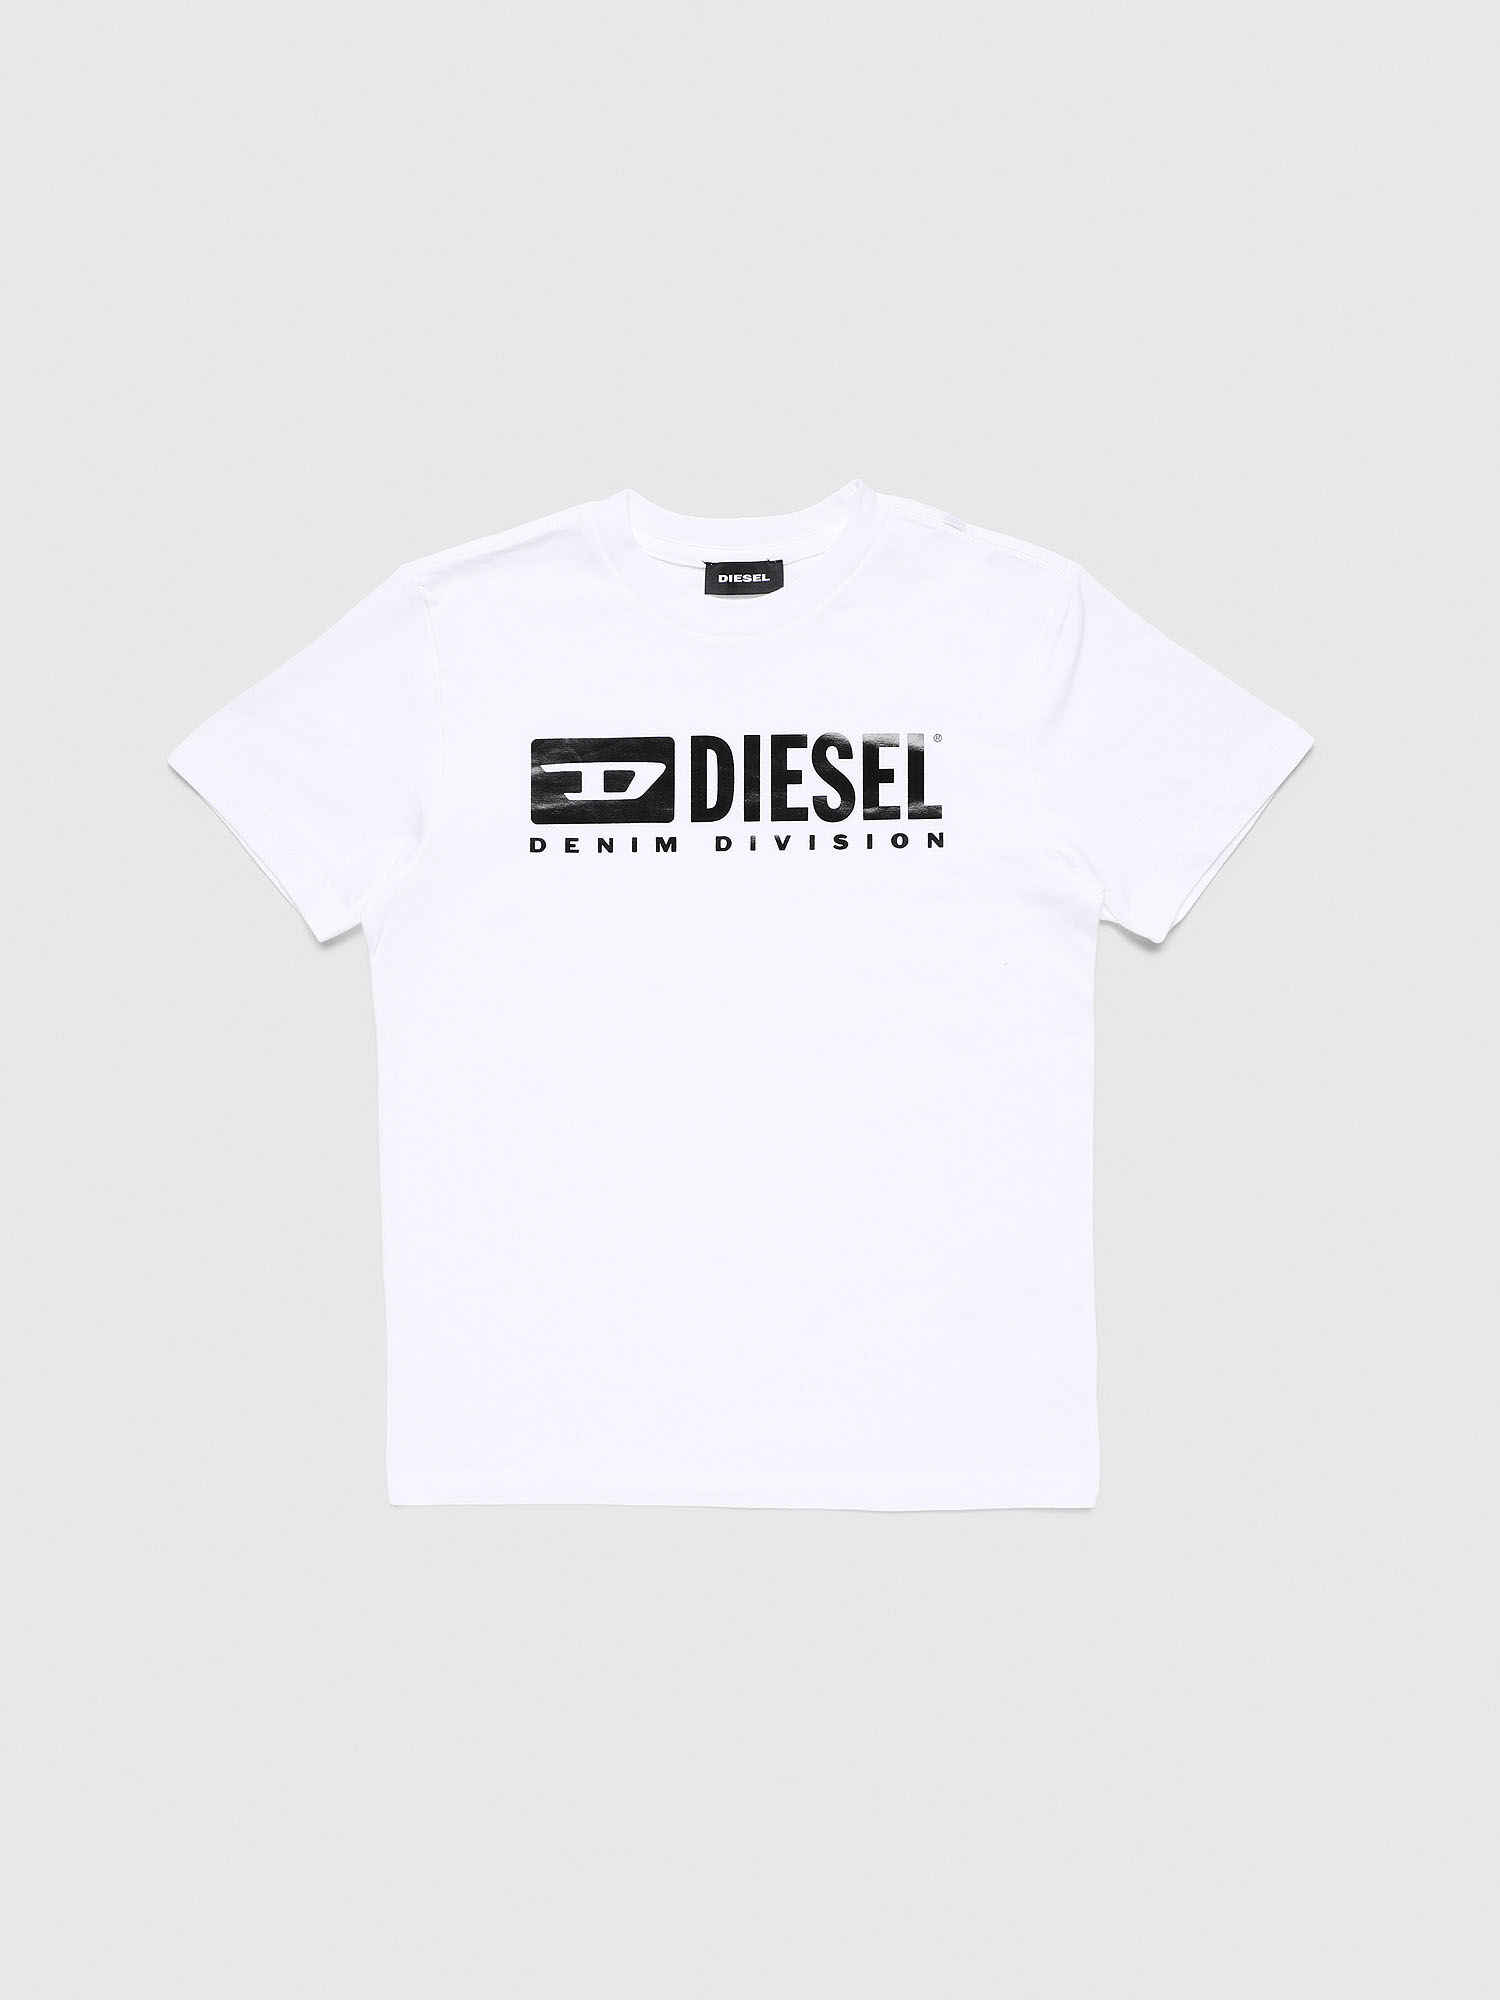 Diesel - TJDIVISION,  - Image 1